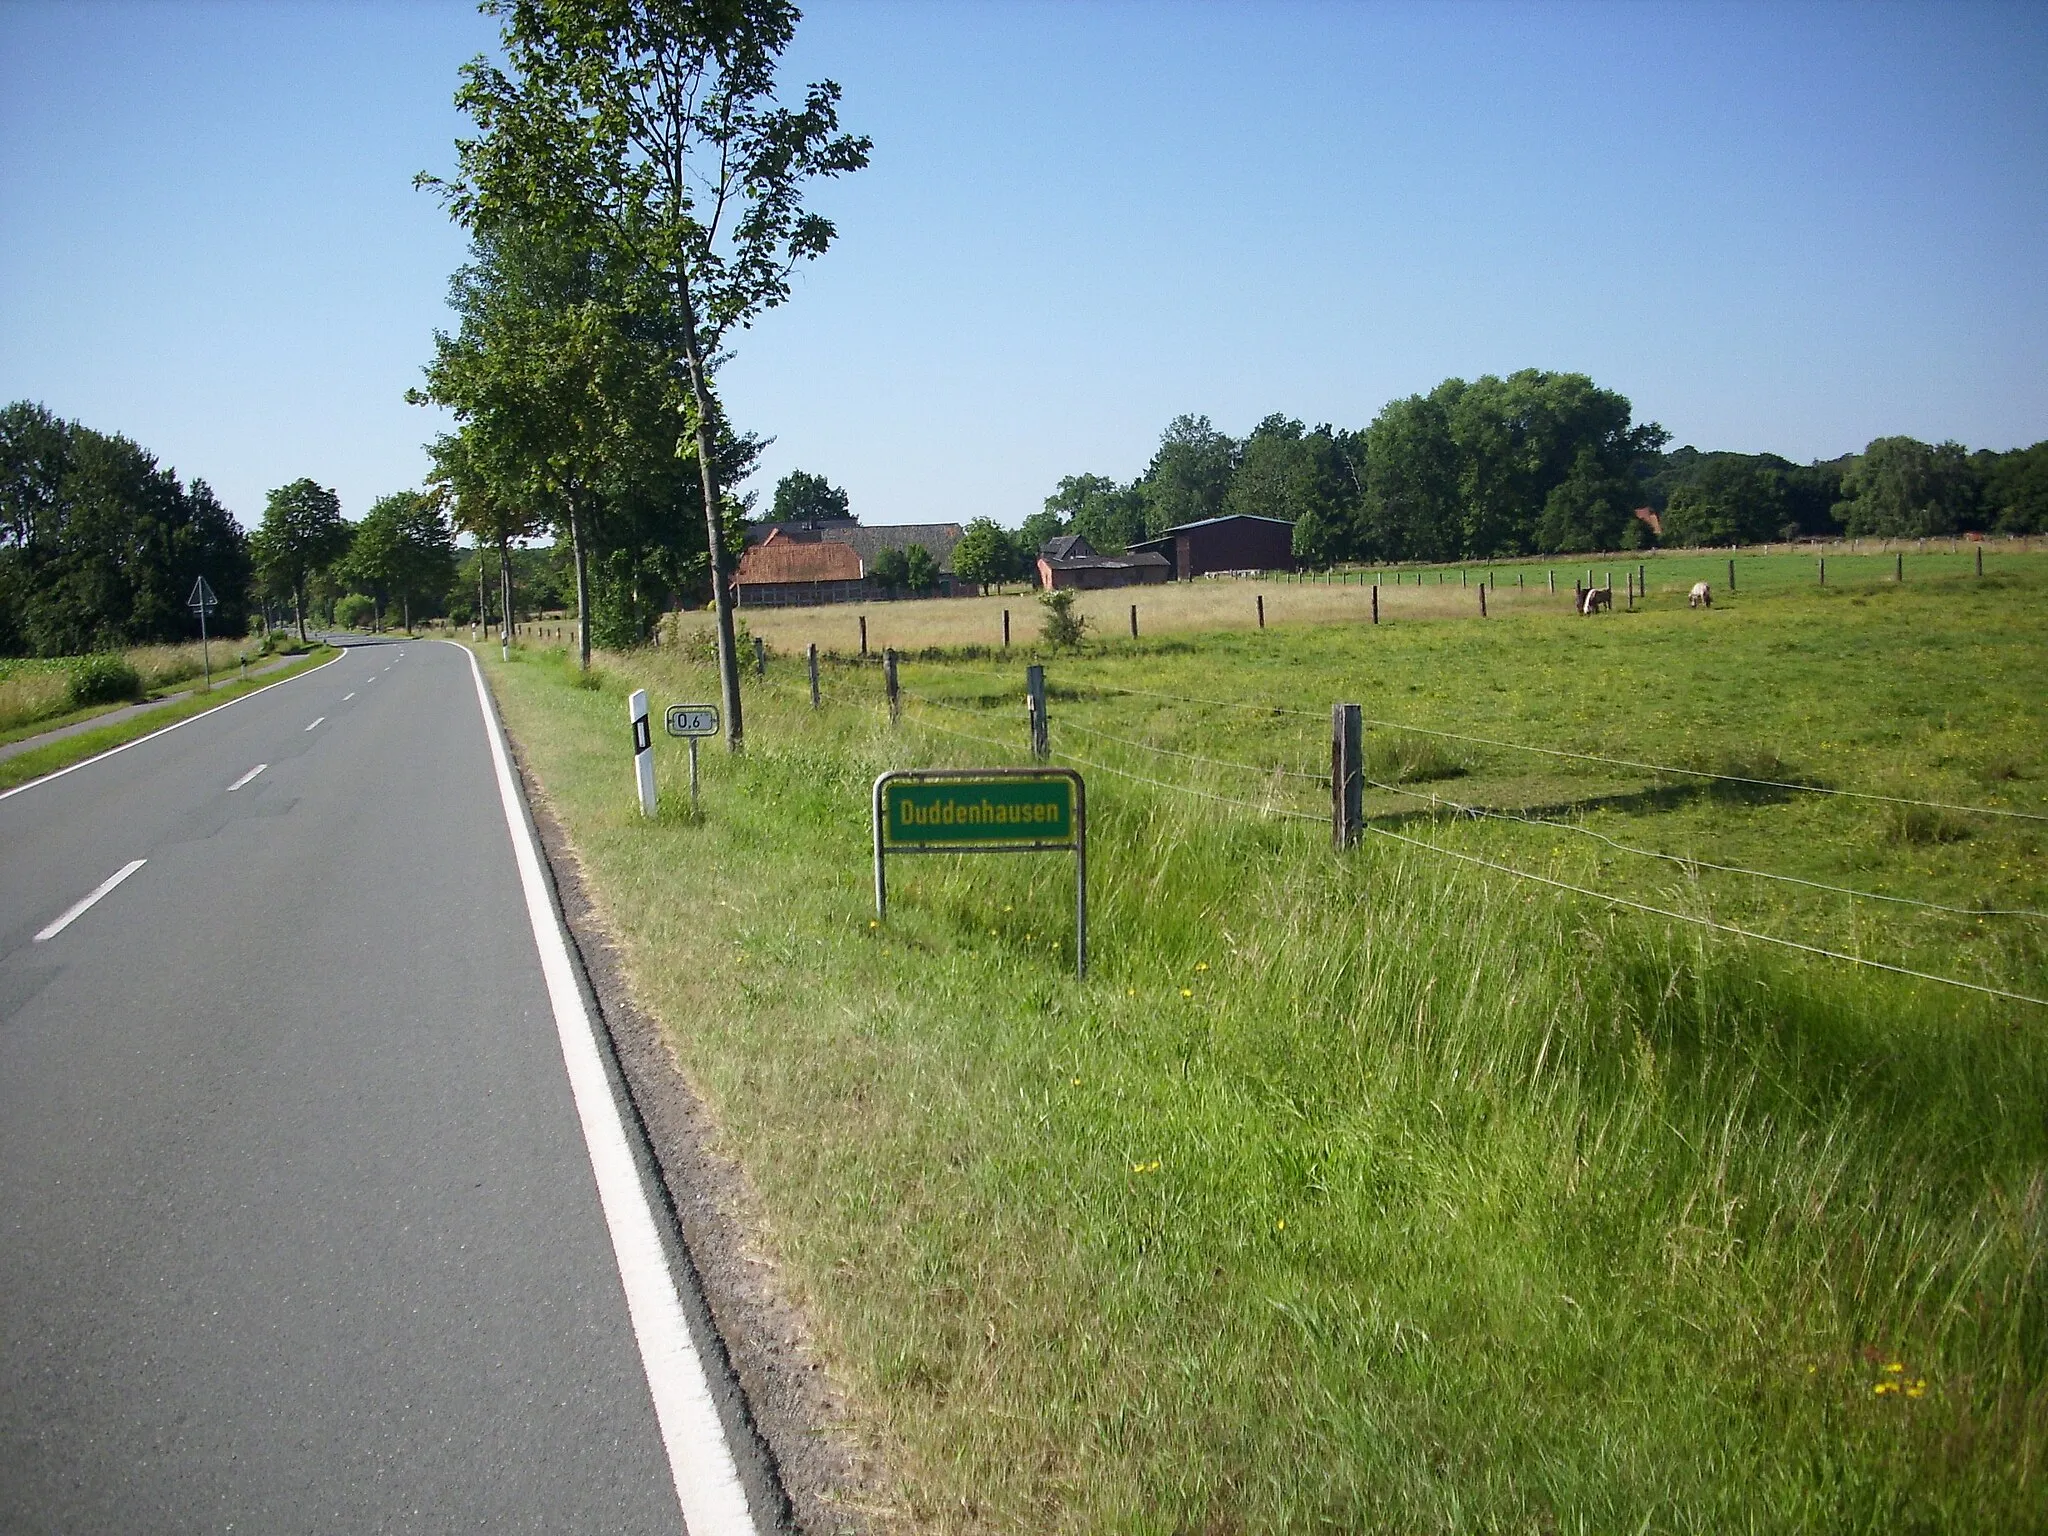 Photo showing: Duddenhausen, entry sign, Bücken, Lower Saxony, Germany